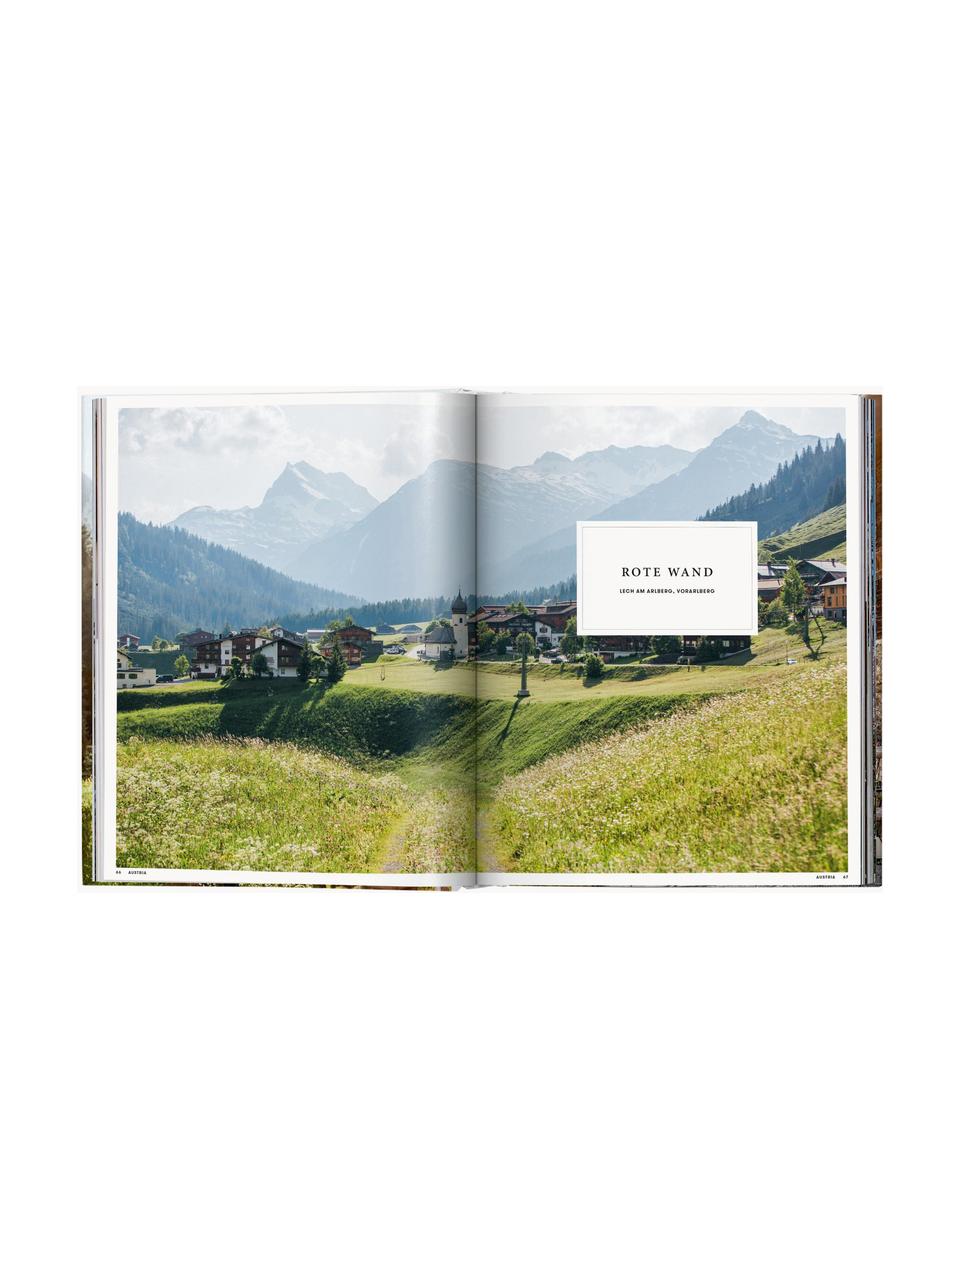 Geïllustreerd boek Great Escapes Alps, Papier, hardcover, Alps, B 24 x H 30 cm